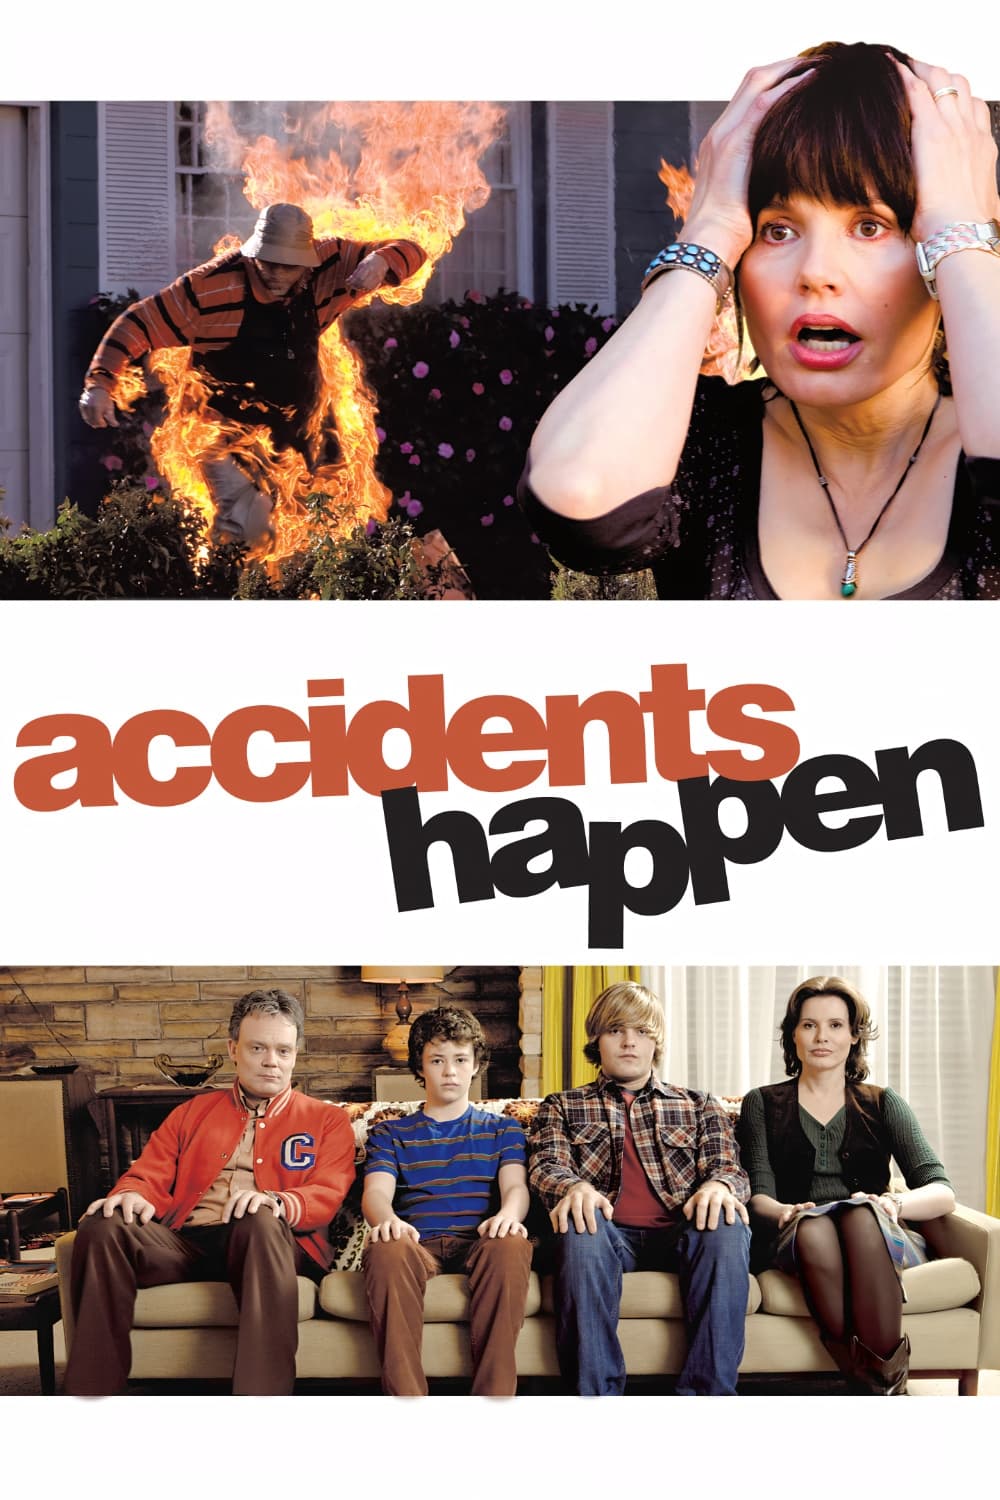 Accidents Happen (2009)